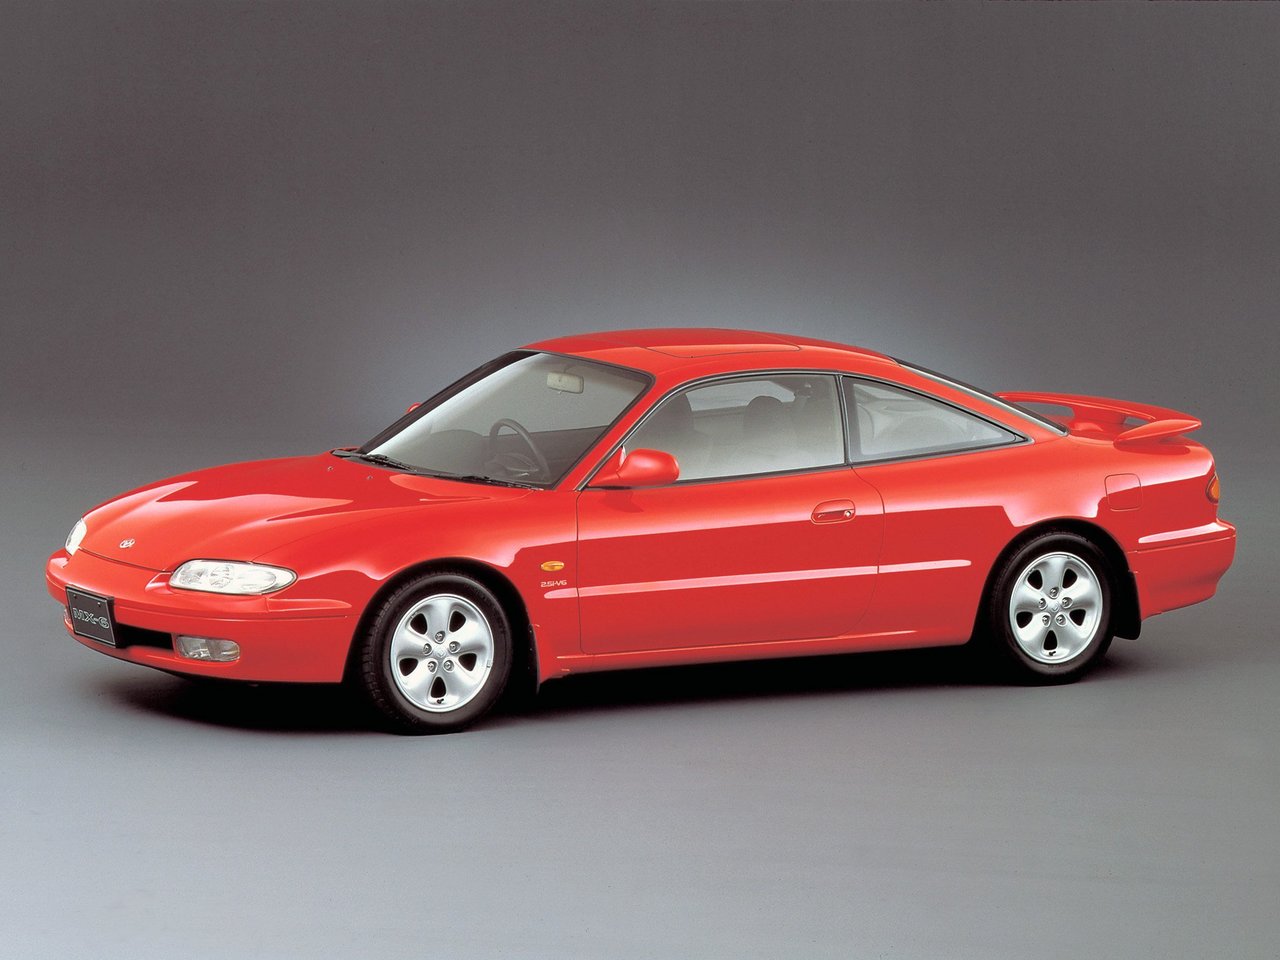 Расход газа четырёх комплектаций купе Mazda MX-6. Разница стоимости заправки газом и бензином. Автономный пробег до и после установки ГБО.